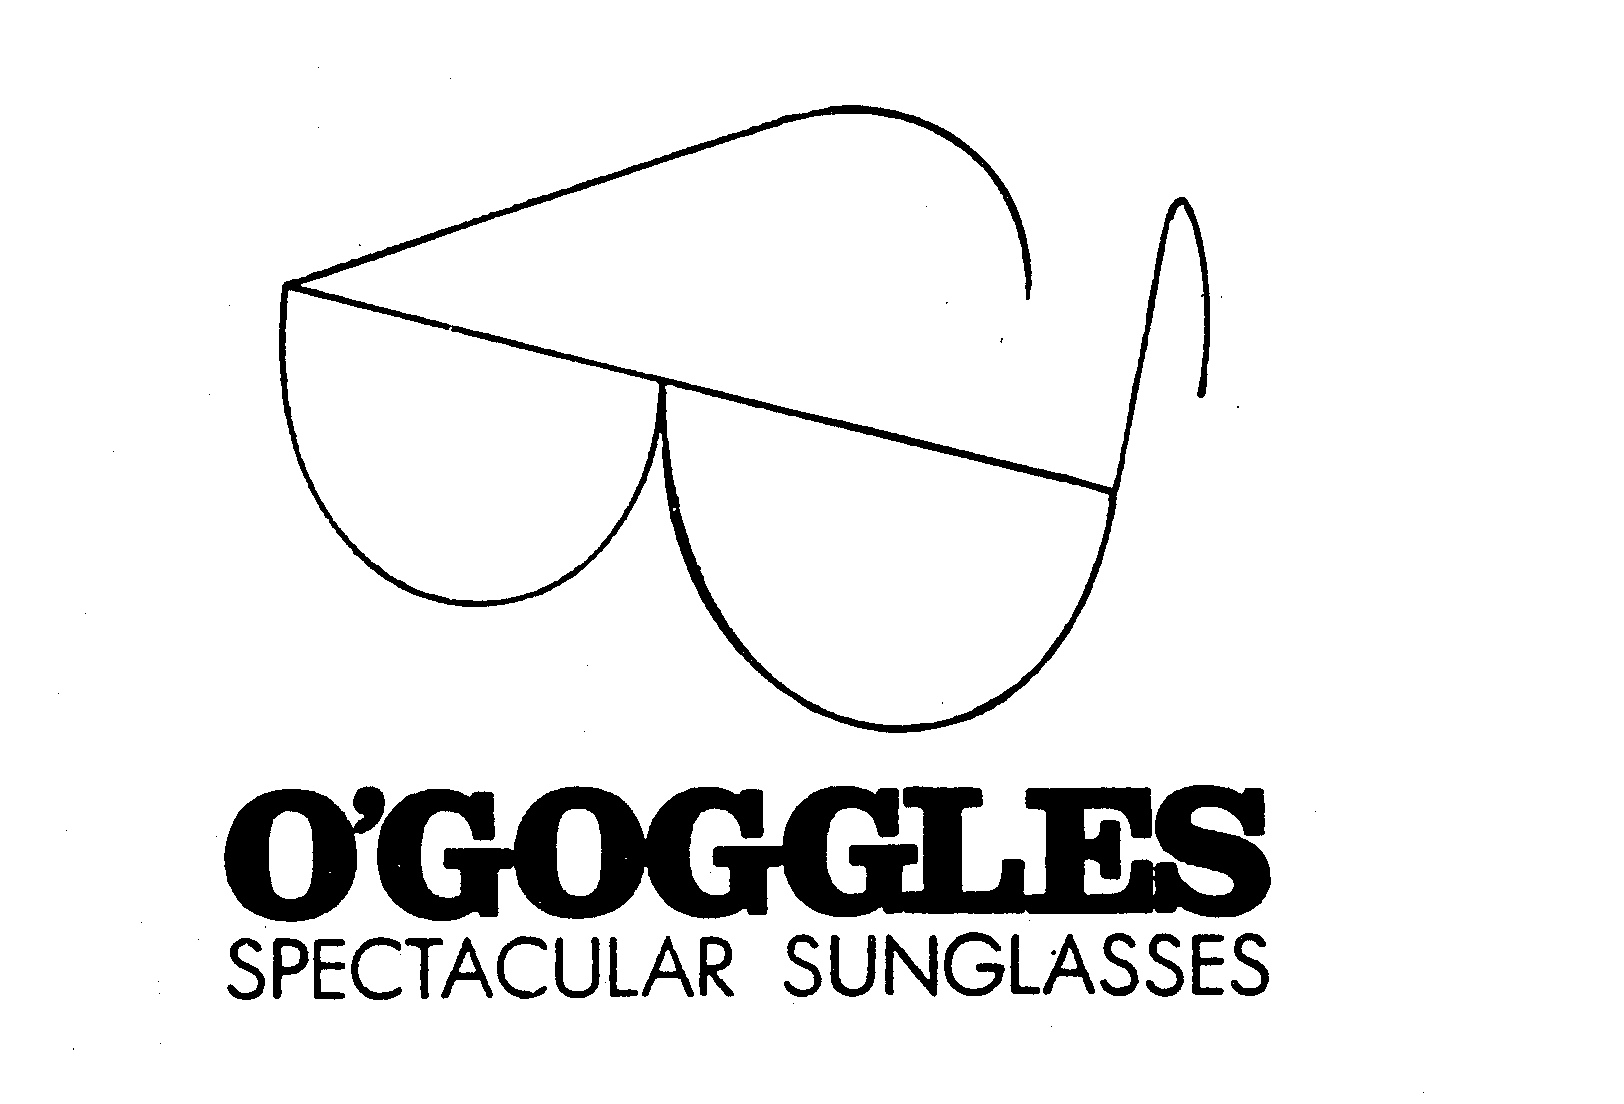  O'GOGGLES SPECTACULAR SUNGLASSES